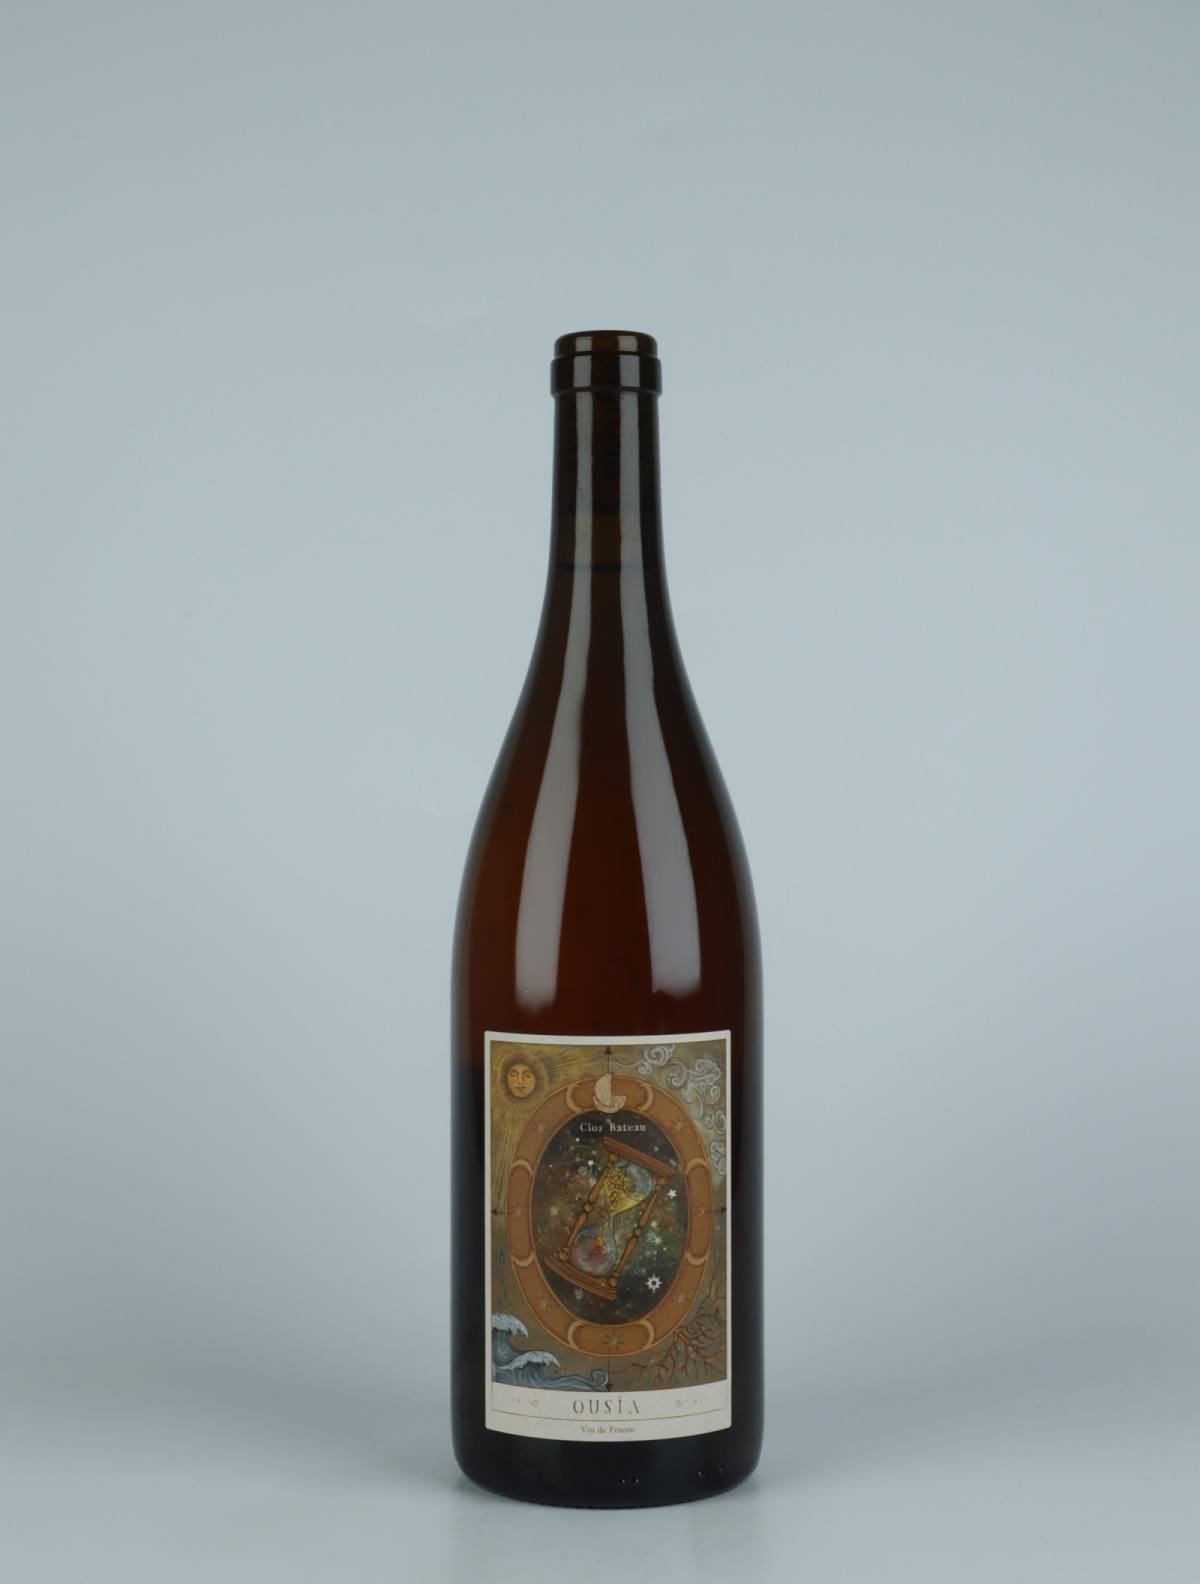 A bottle 2021 Ousia Rosé from Clos Bateau, Beaujolais in France